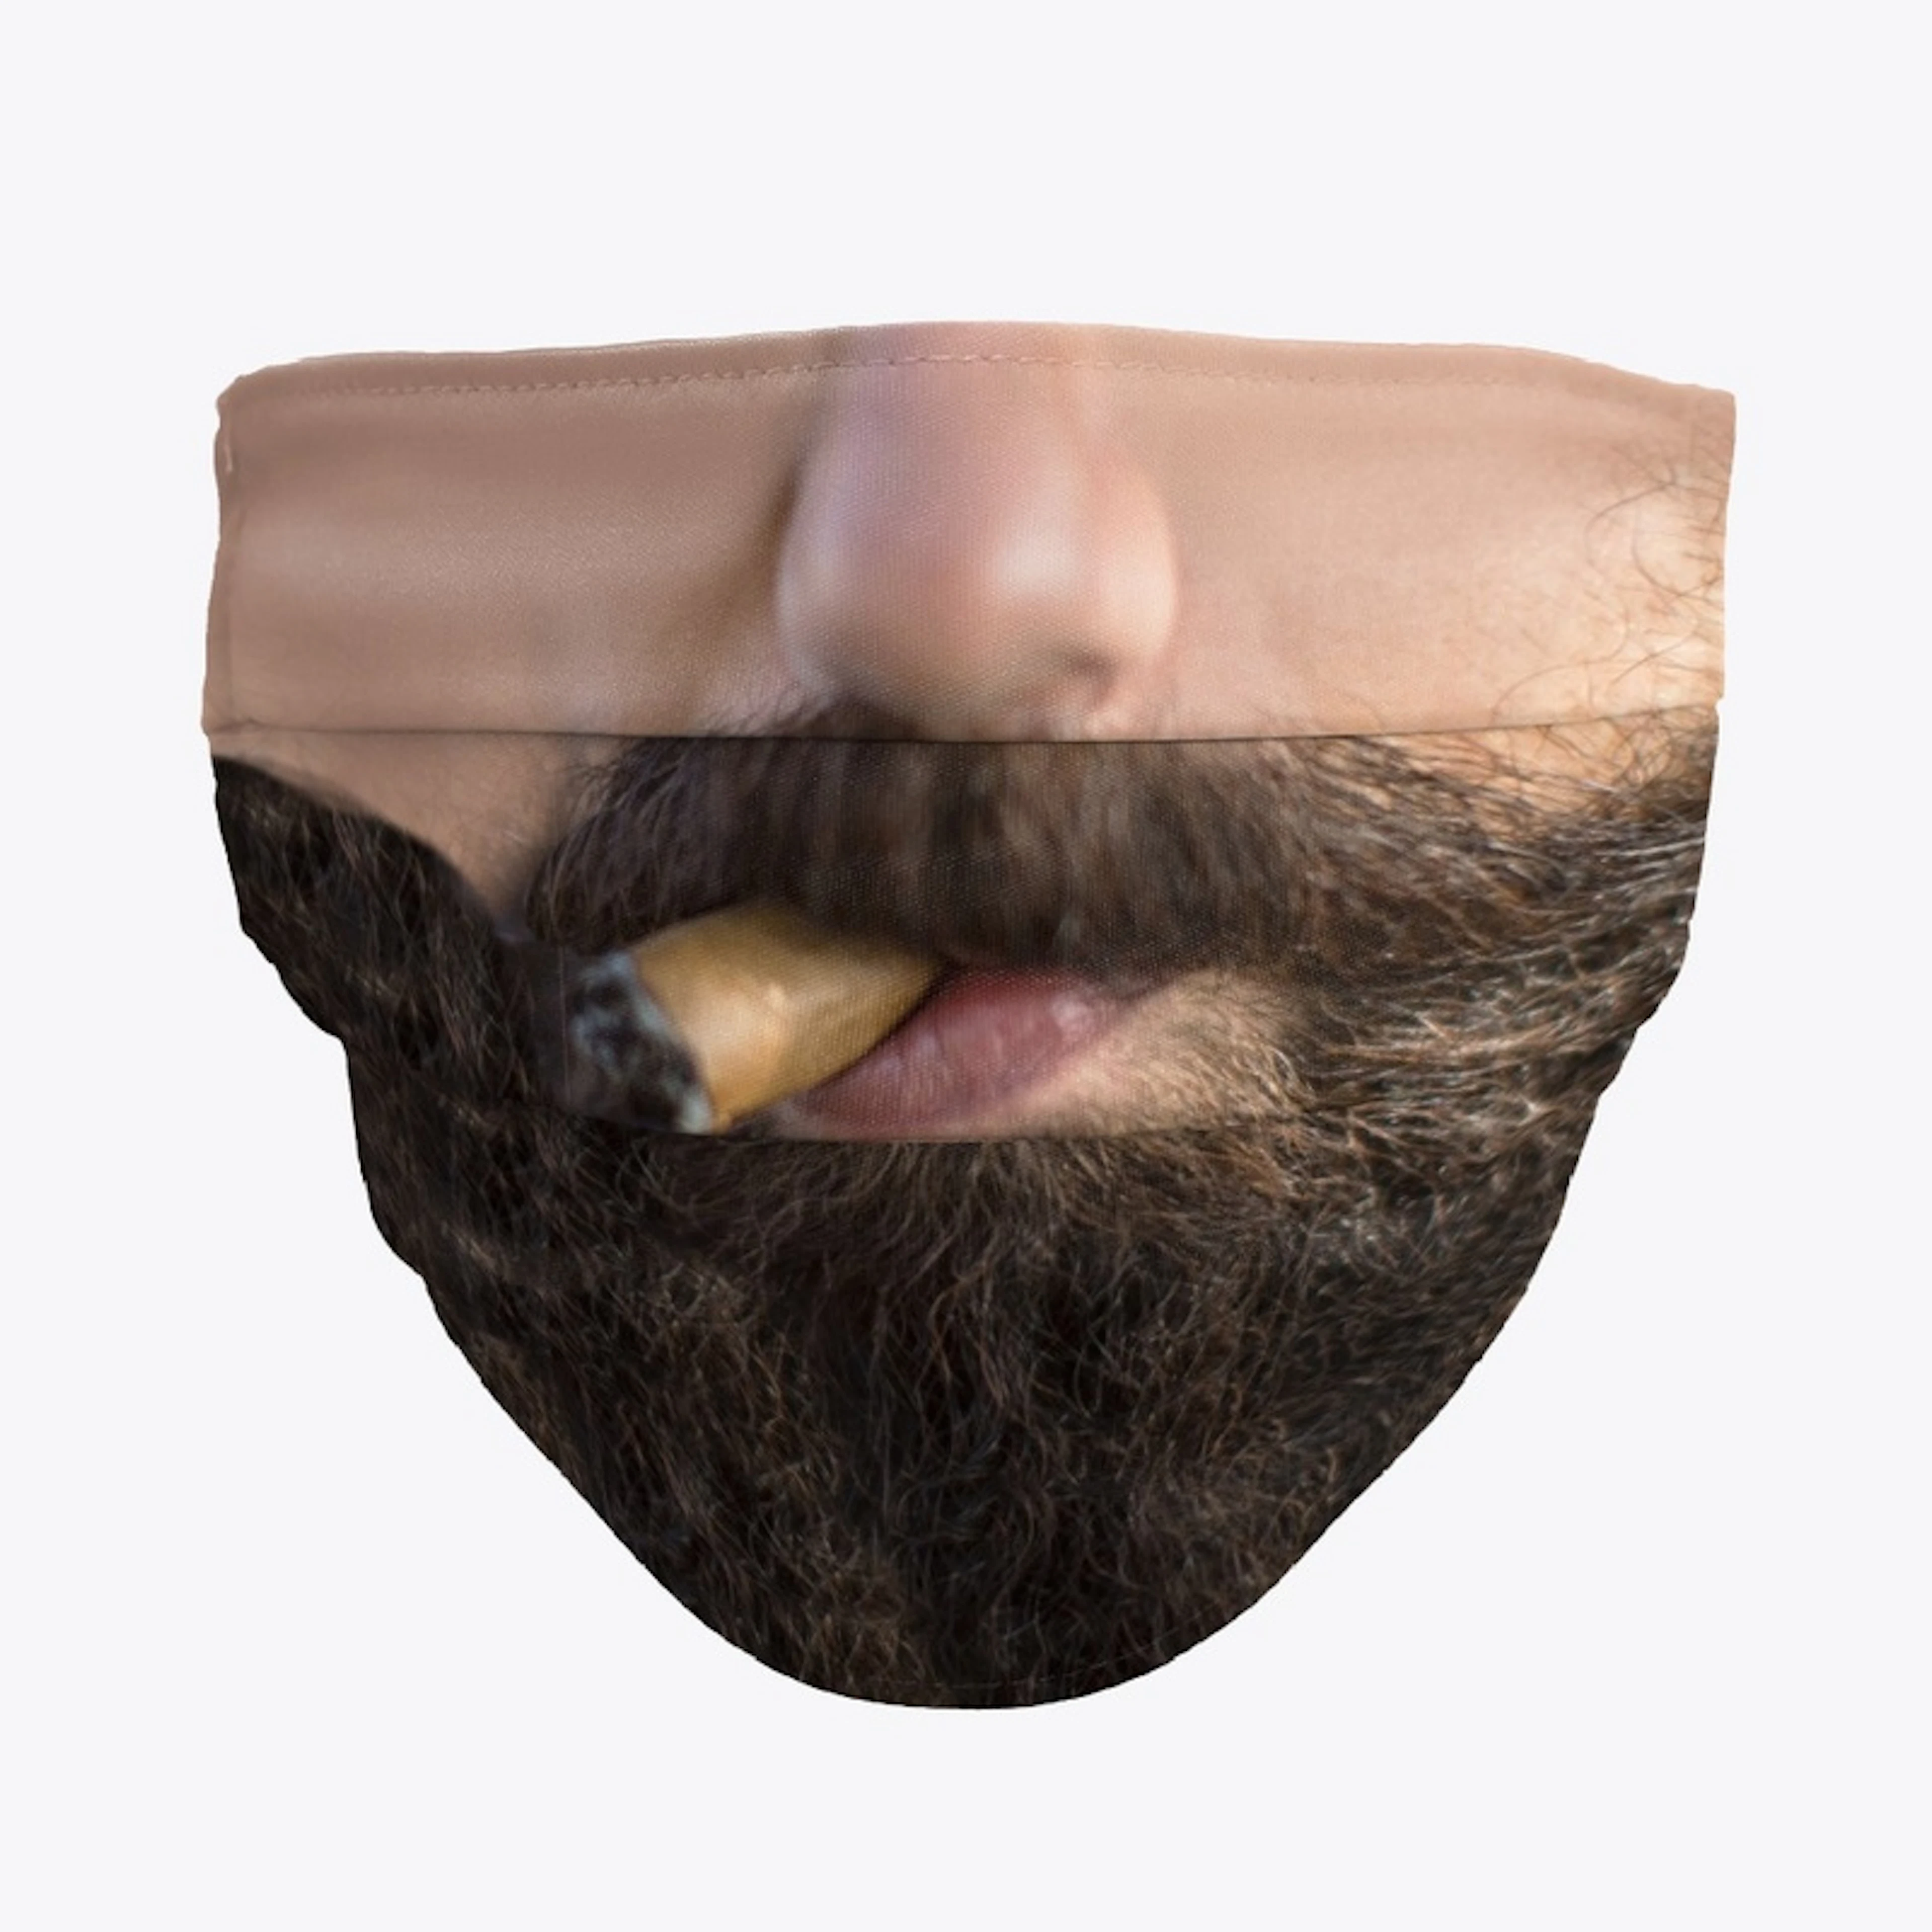 Beard with cigar face mask